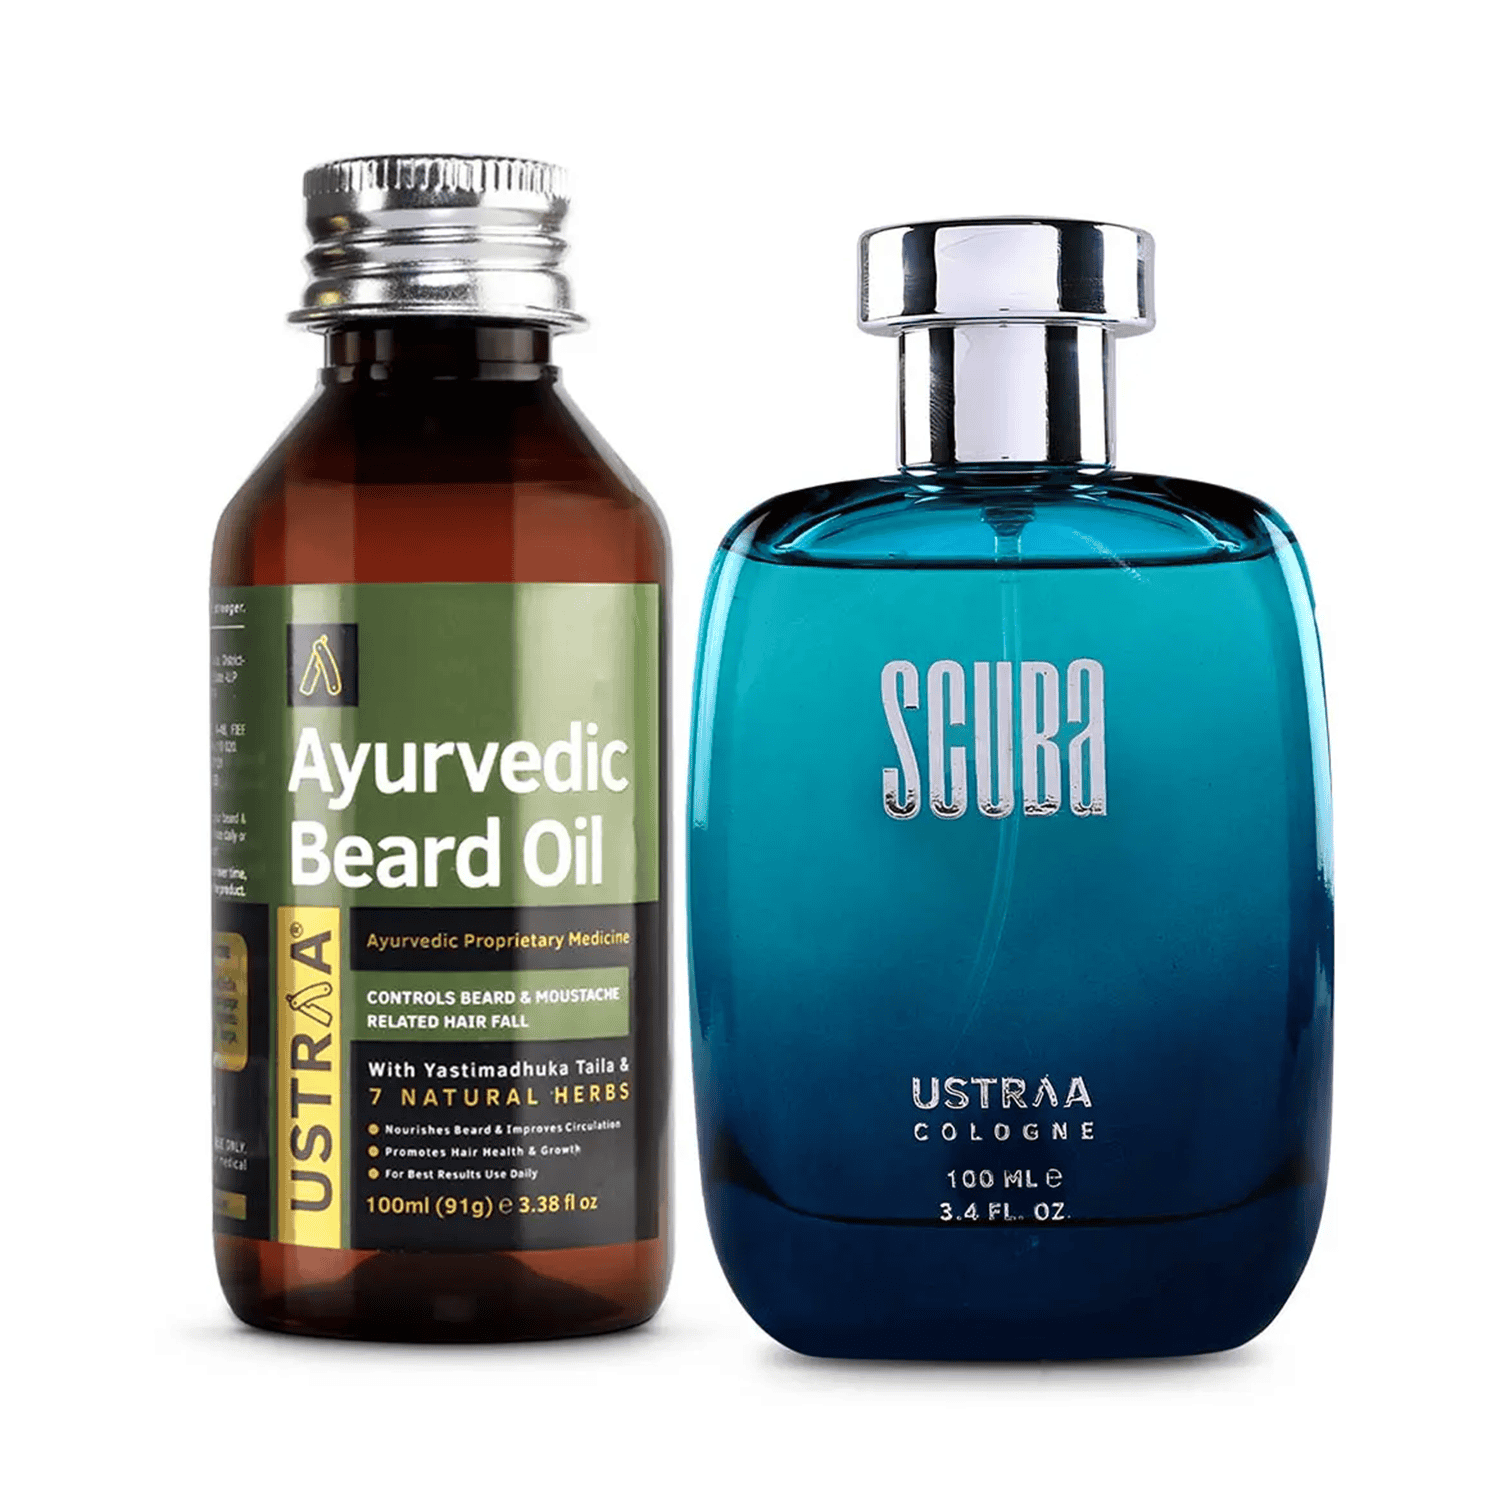 Ustraa | Ustraa Ayurvedic Beard Growth Oil & Scuba Cologne - Perfume For Men